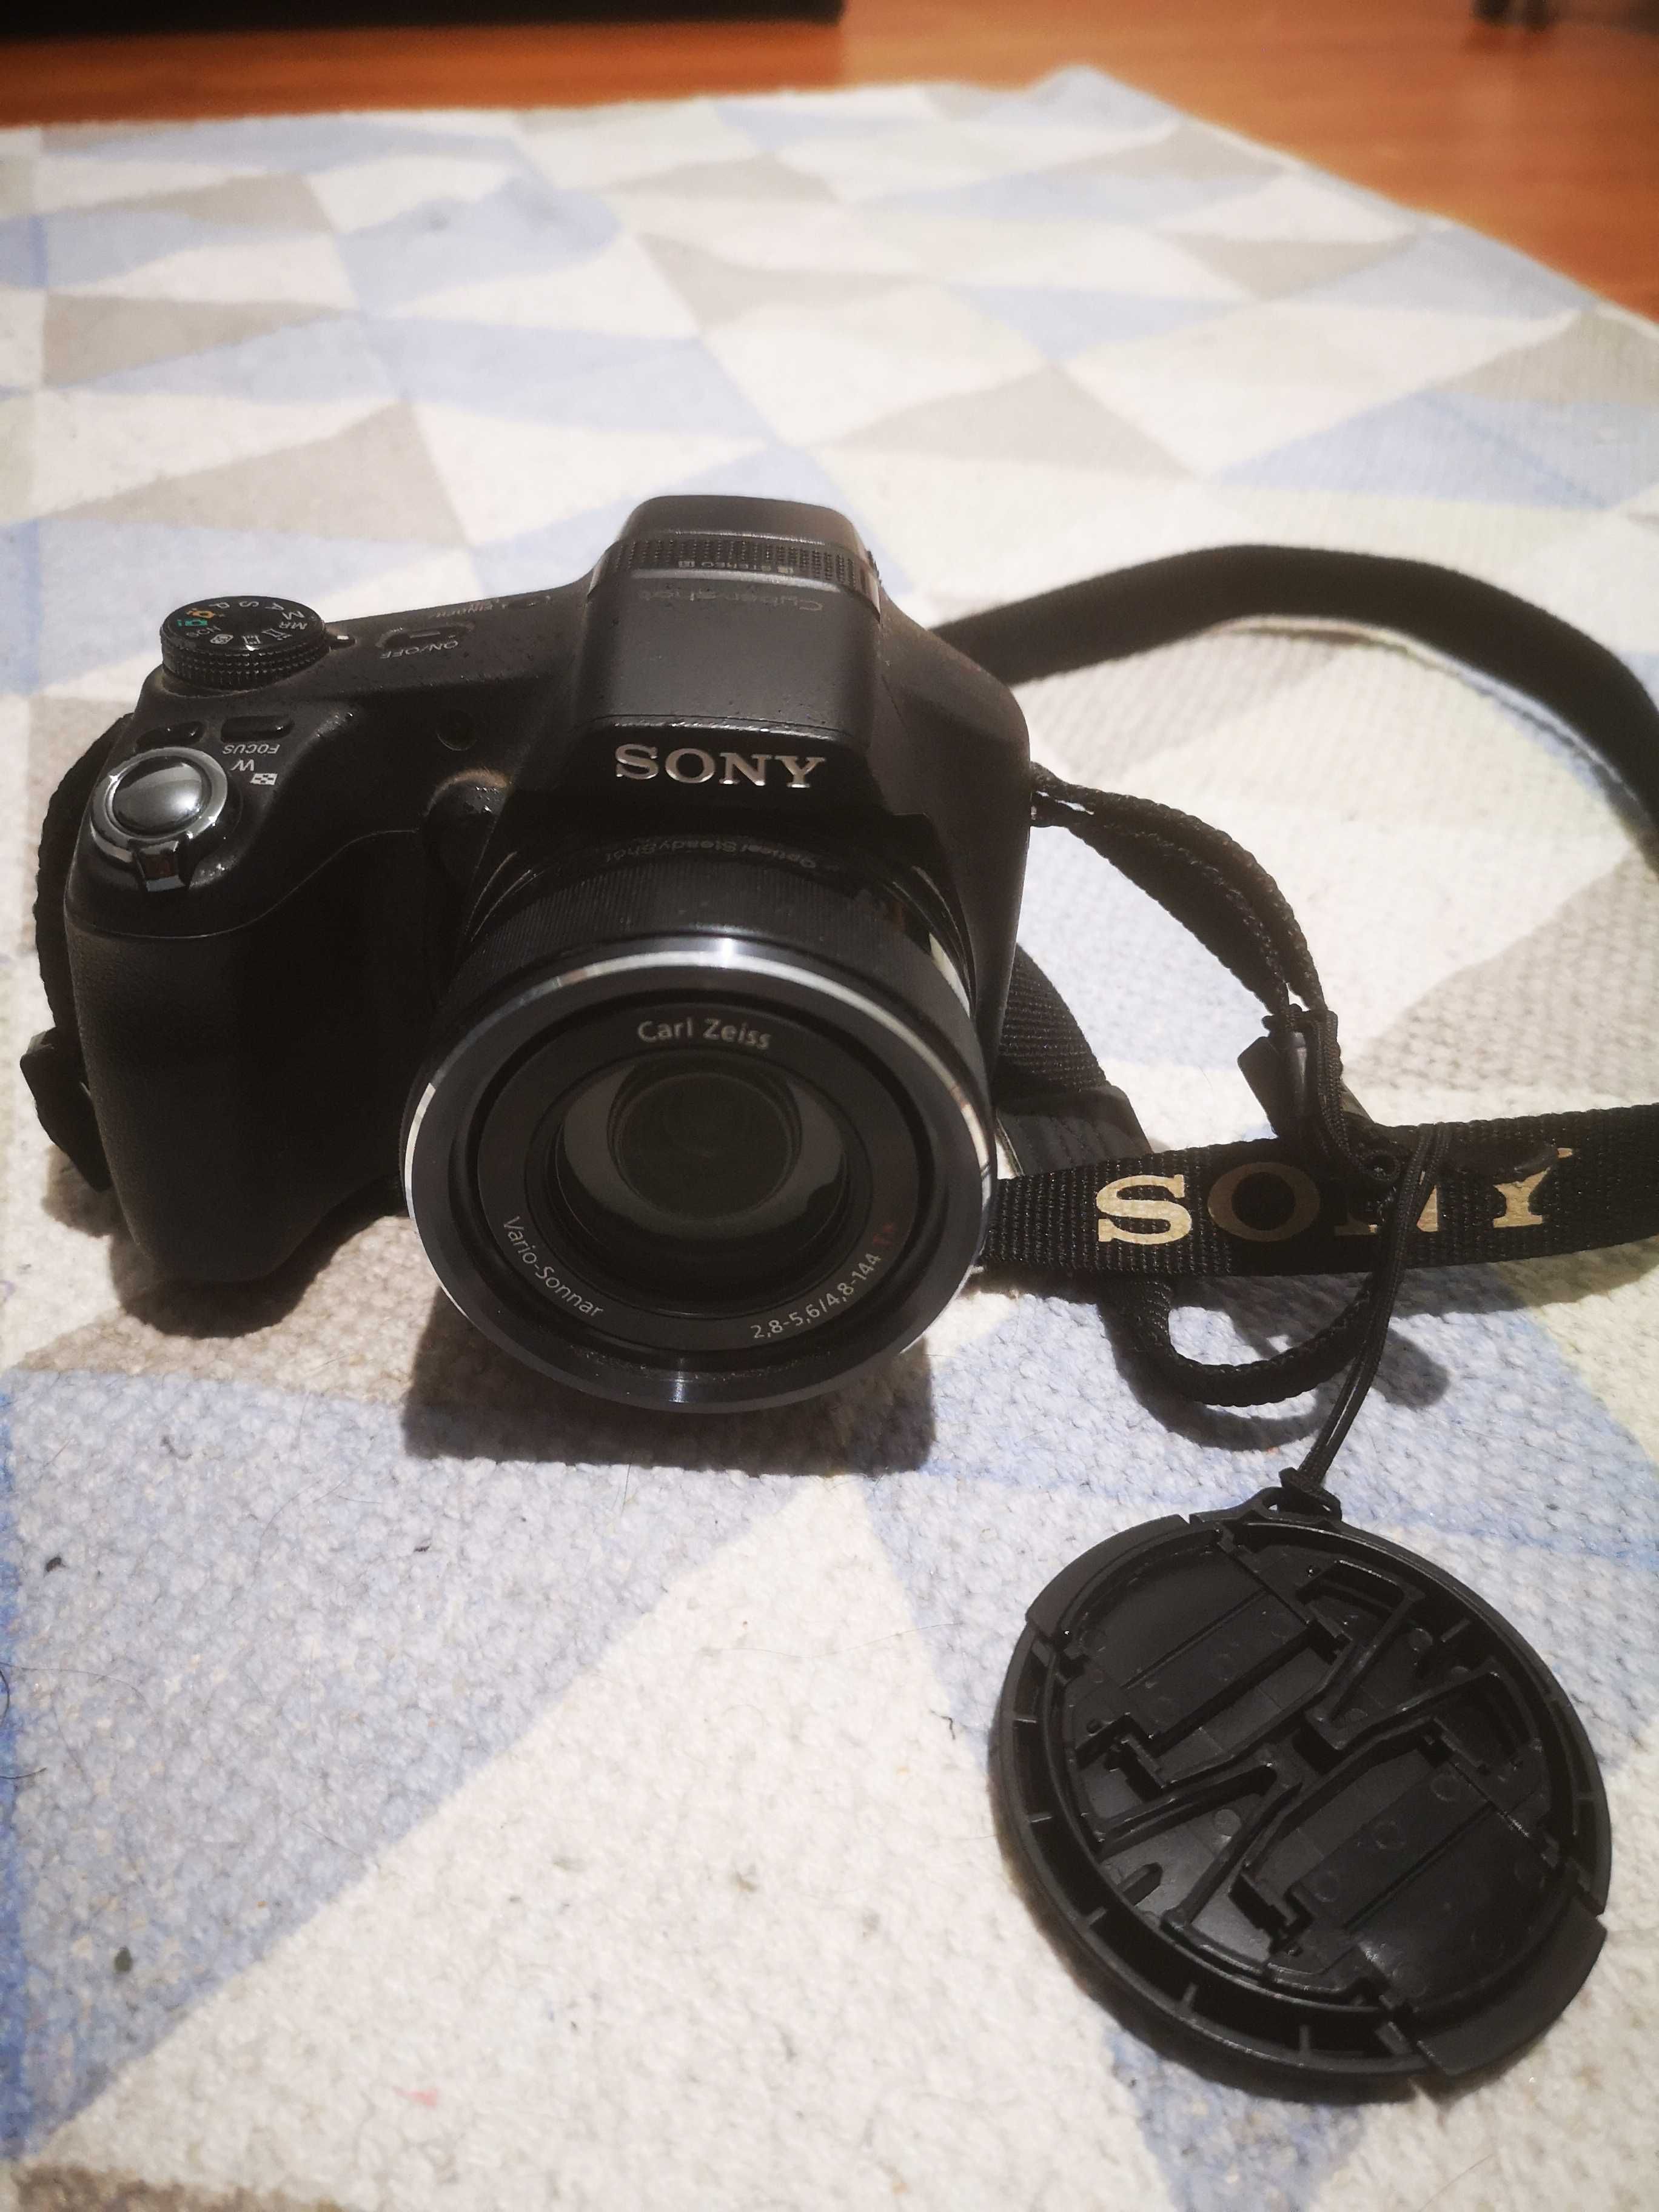 Camera Sony Cyber-shot DSC-HX100V Bridge 16 - Preto